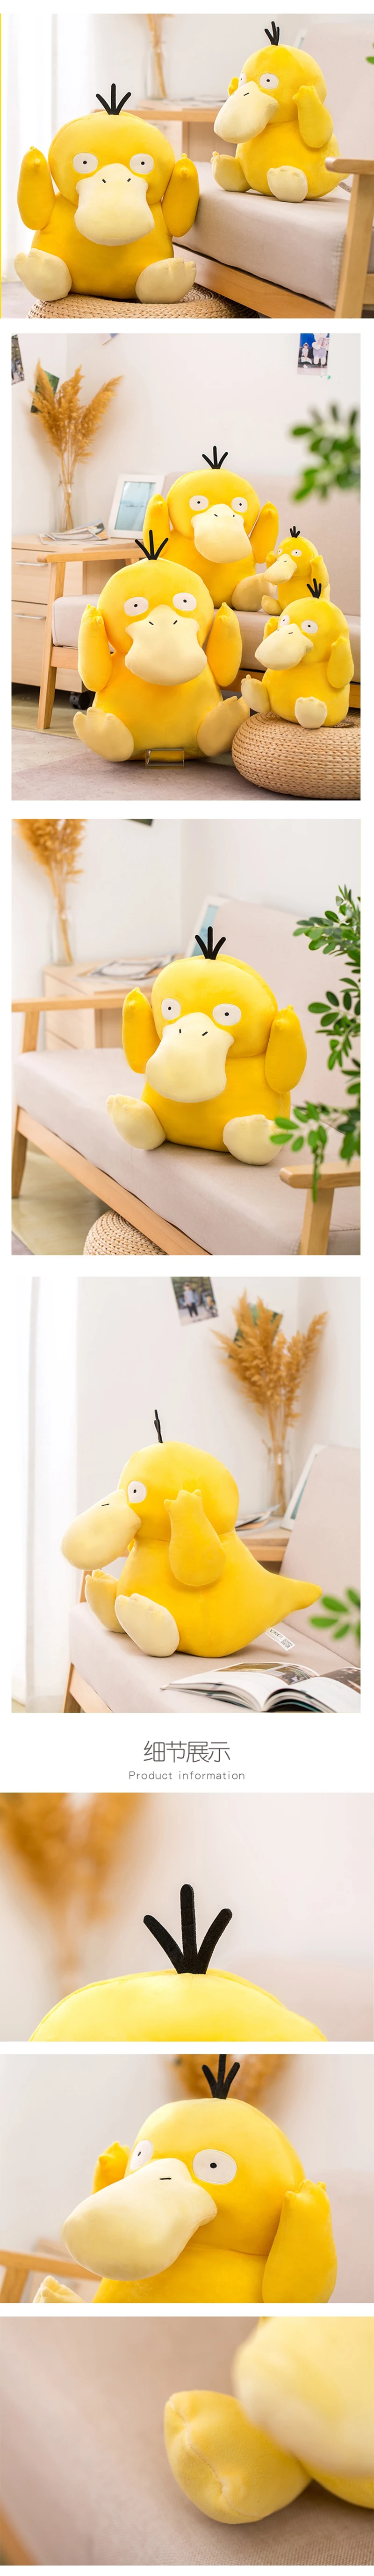 pato pikachu boneca recheada anime travesseiro presente